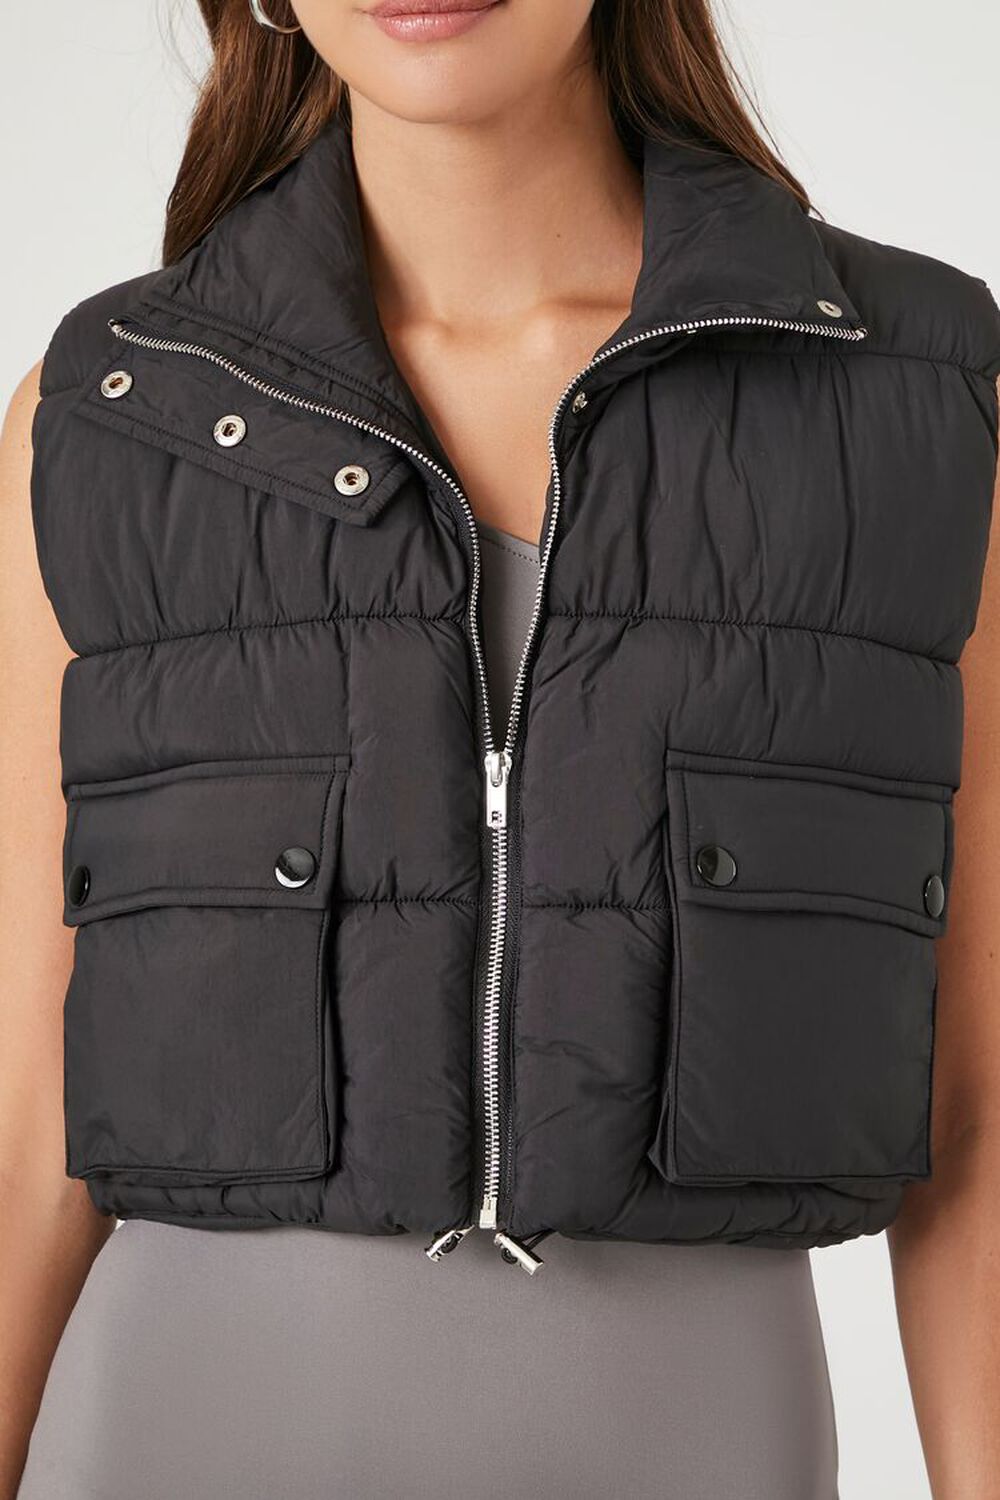 Forever 21 Women's Zip-Up Puffer Vest